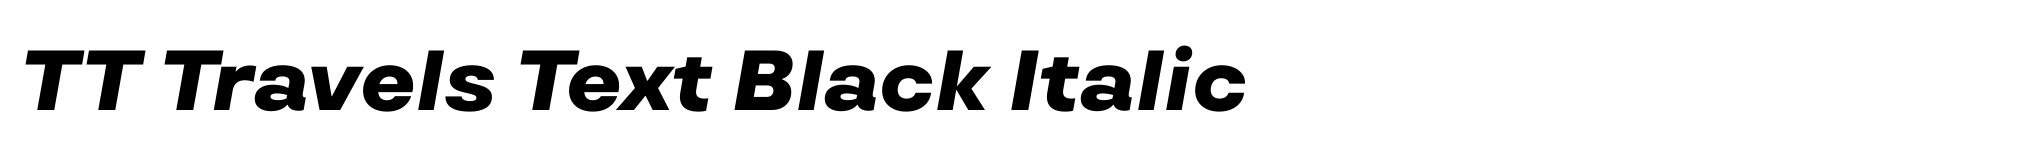 TT Travels Text Black Italic image